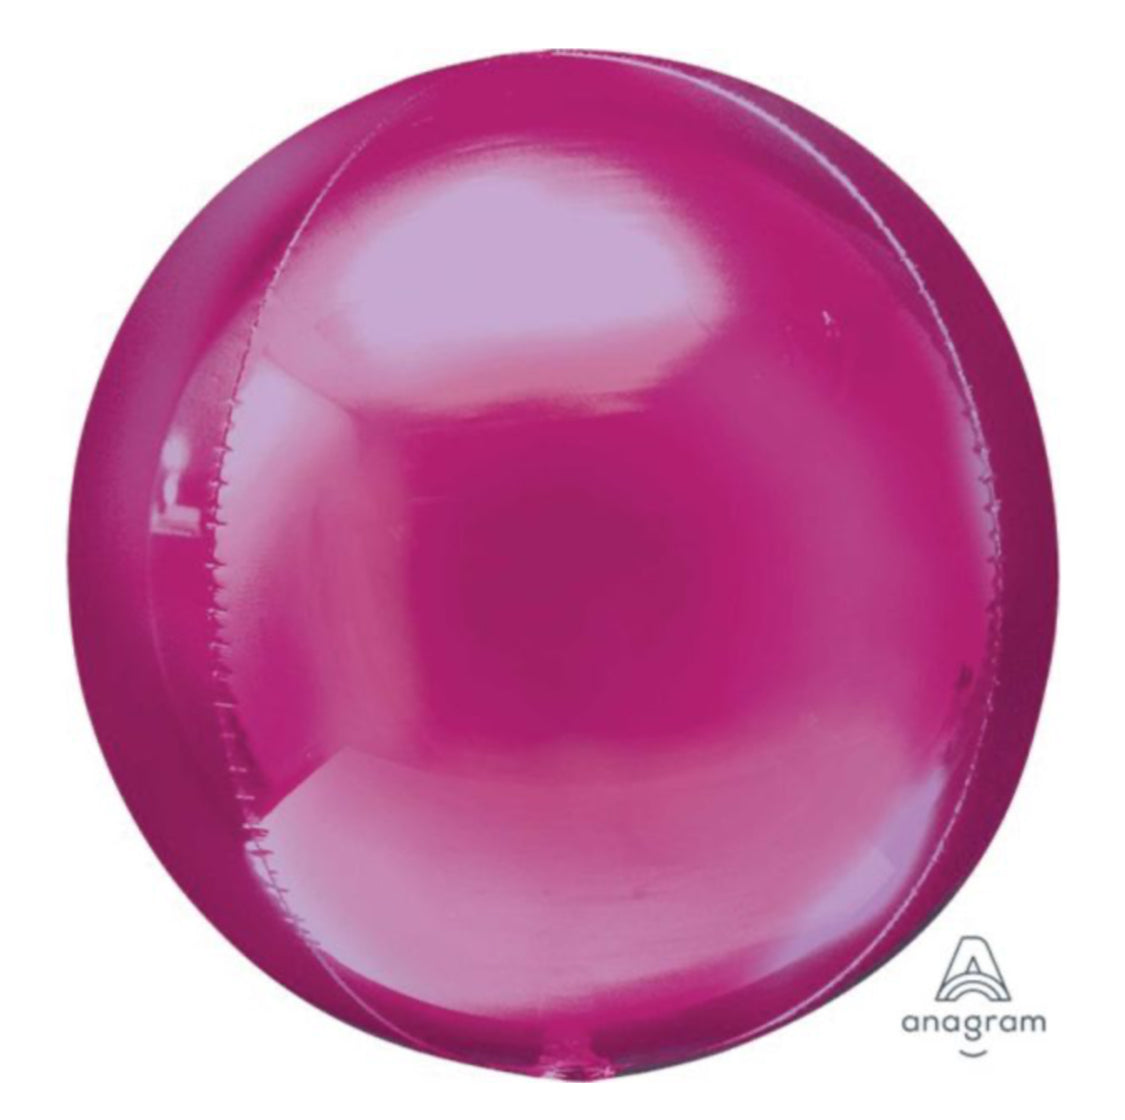 Money Balloon - Hot Pink